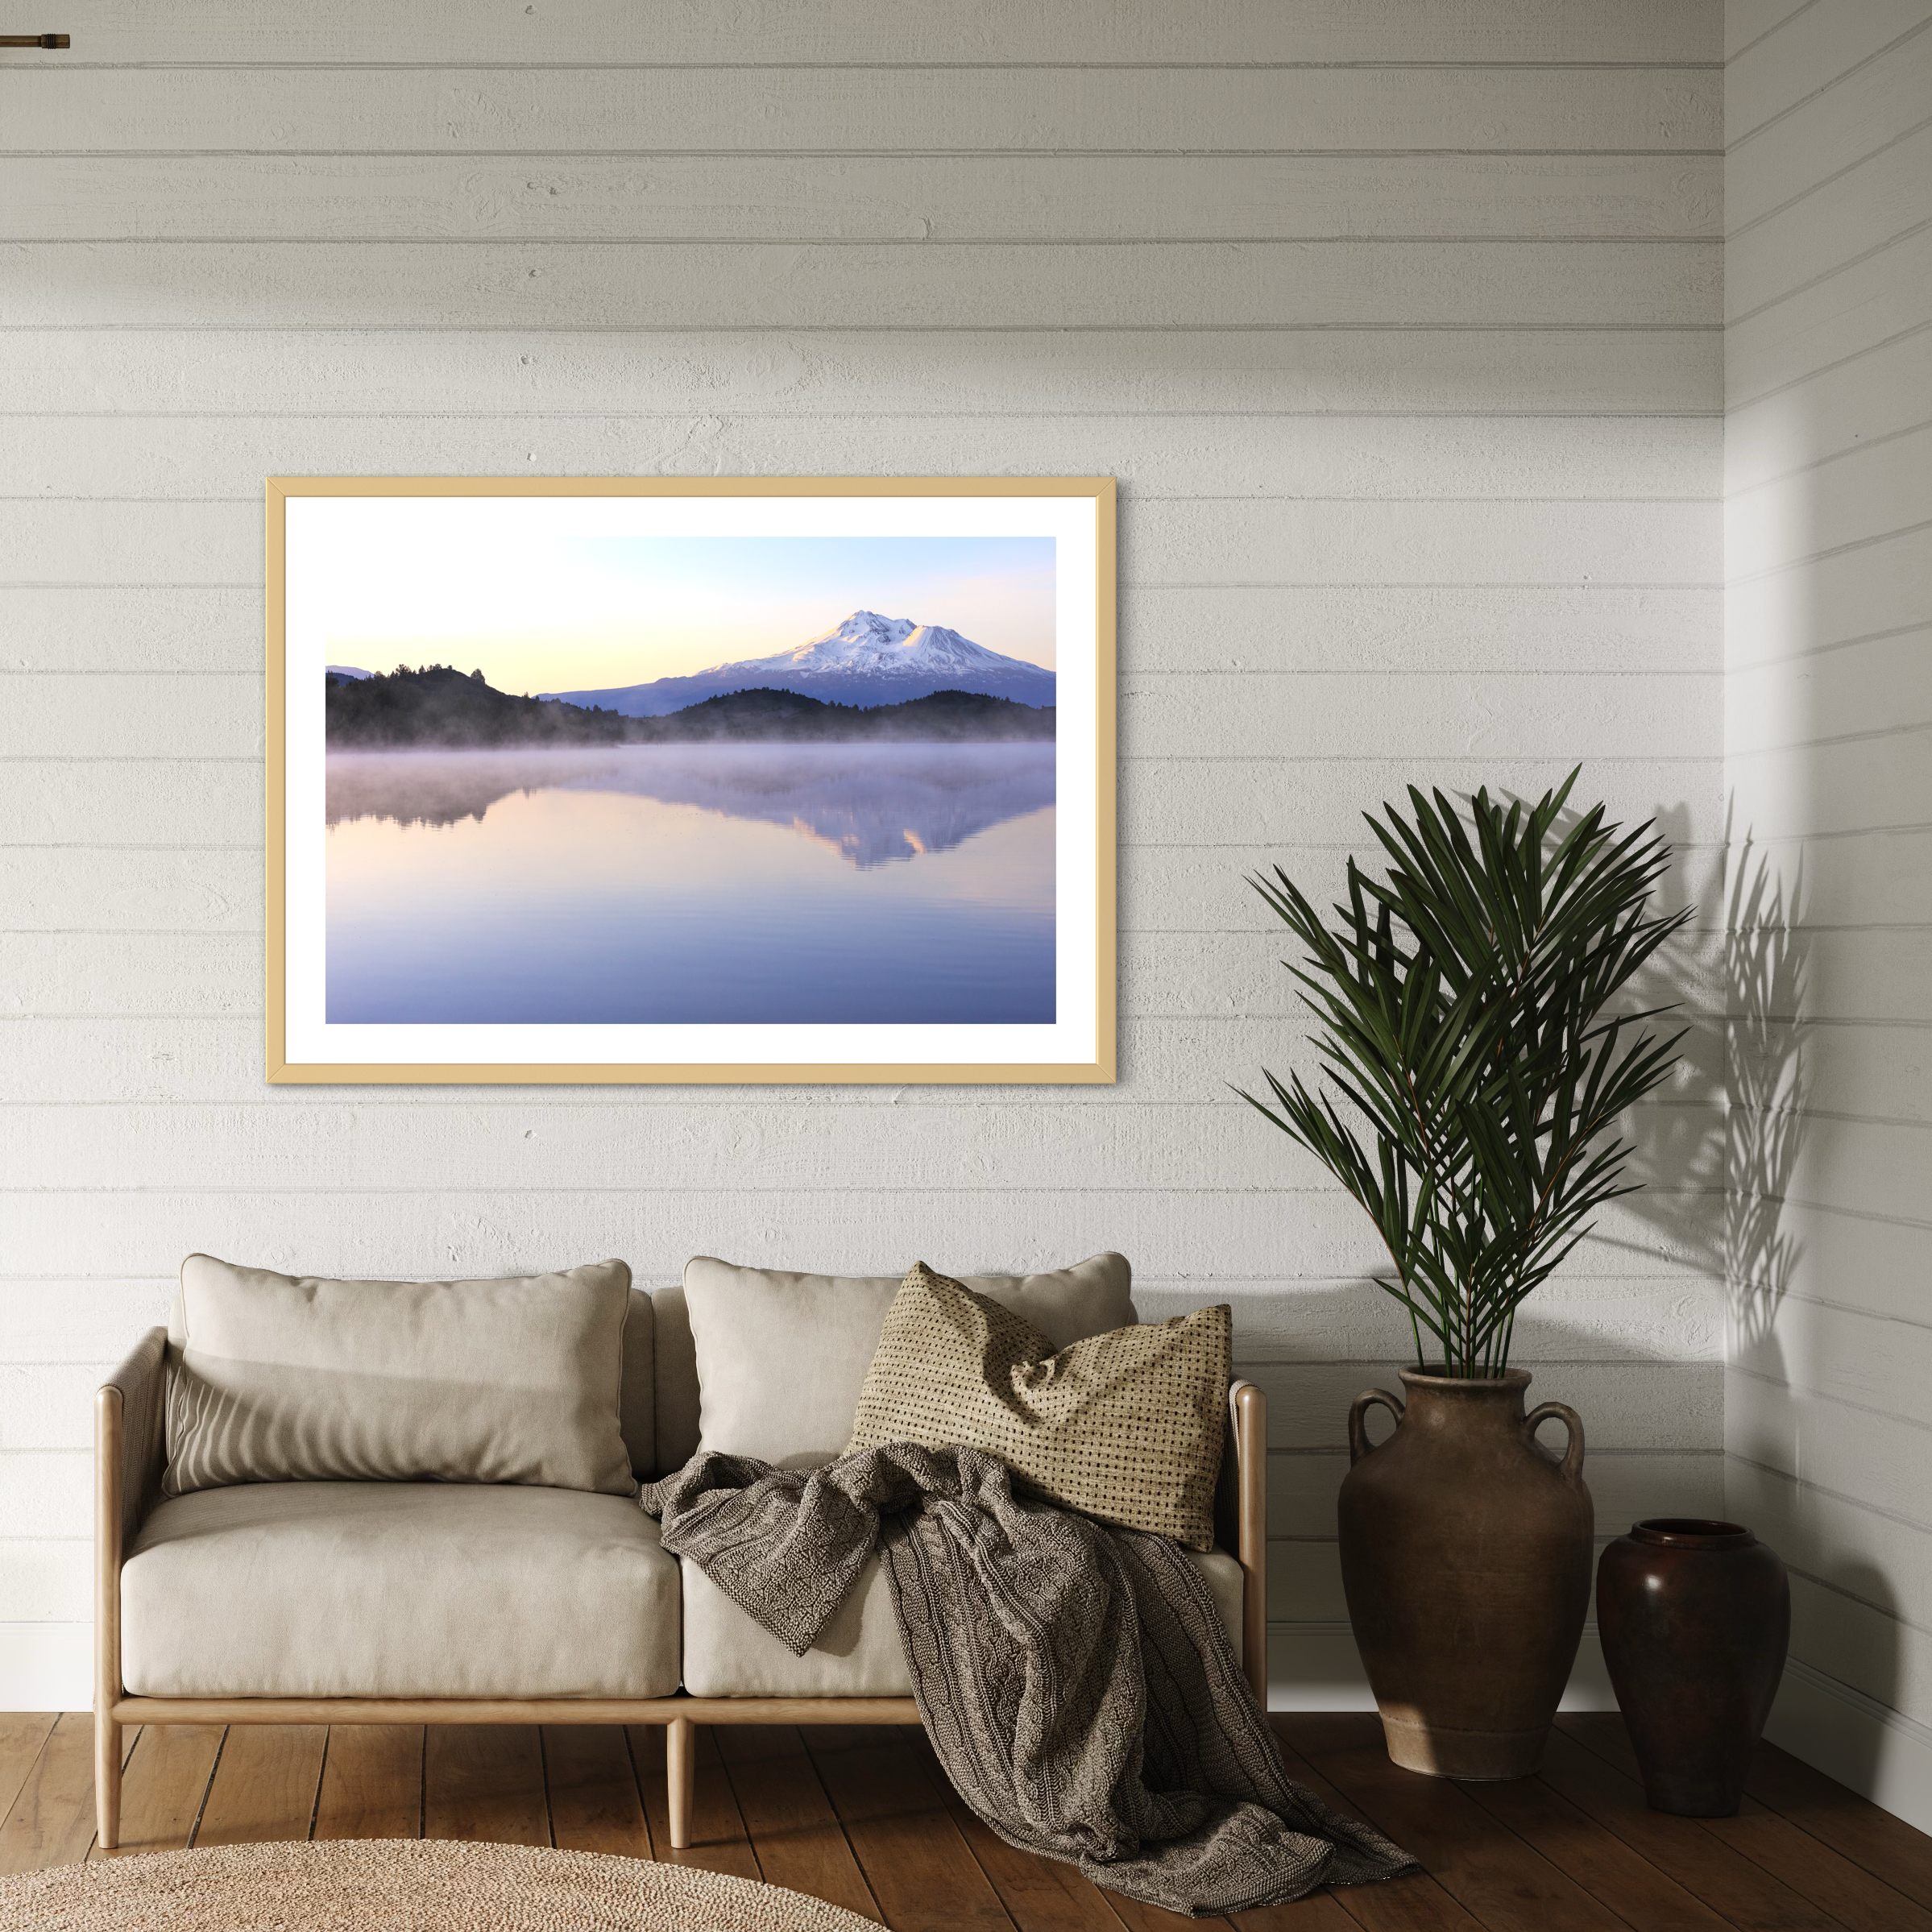 Mount Shasta Reflection Print